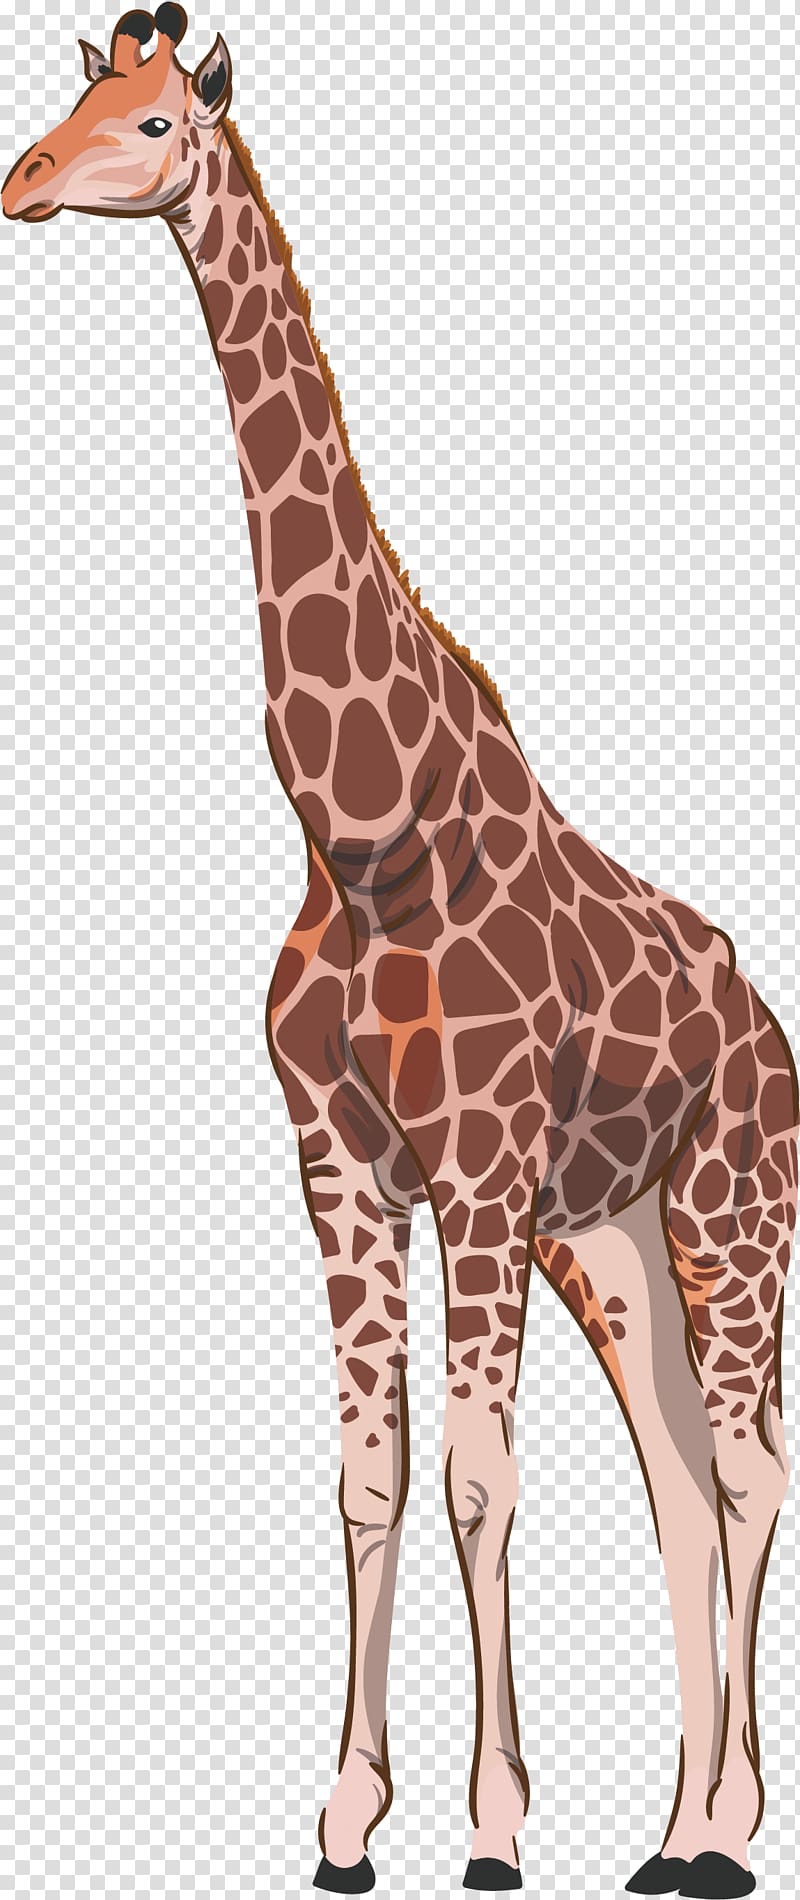 Northern giraffe Common ostrich Animal, Brown giraffe transparent background PNG clipart